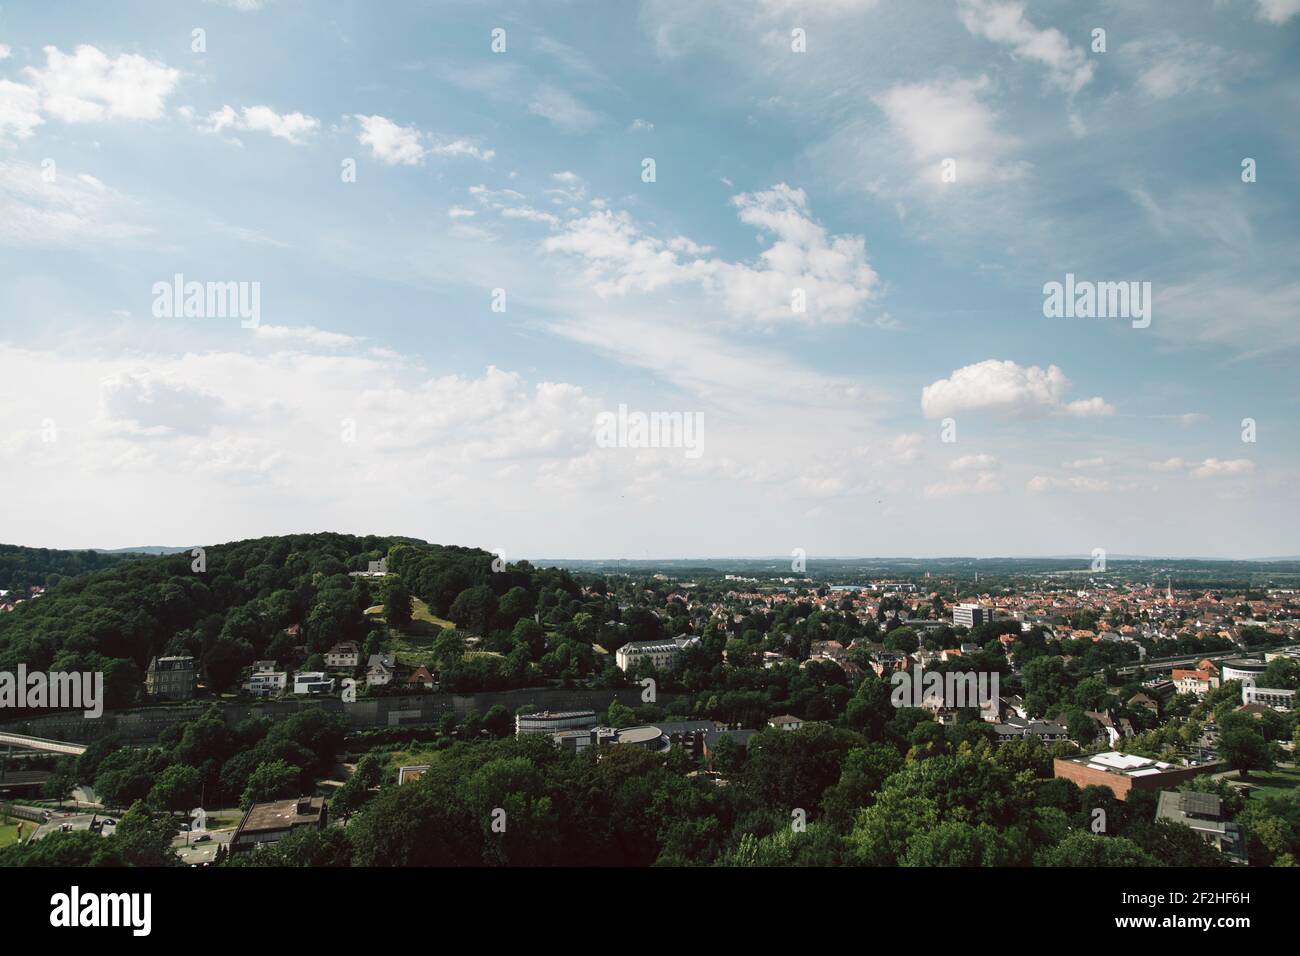 Germany, North Rhine-Westphalia, Bielefeld, city view Stock Photo